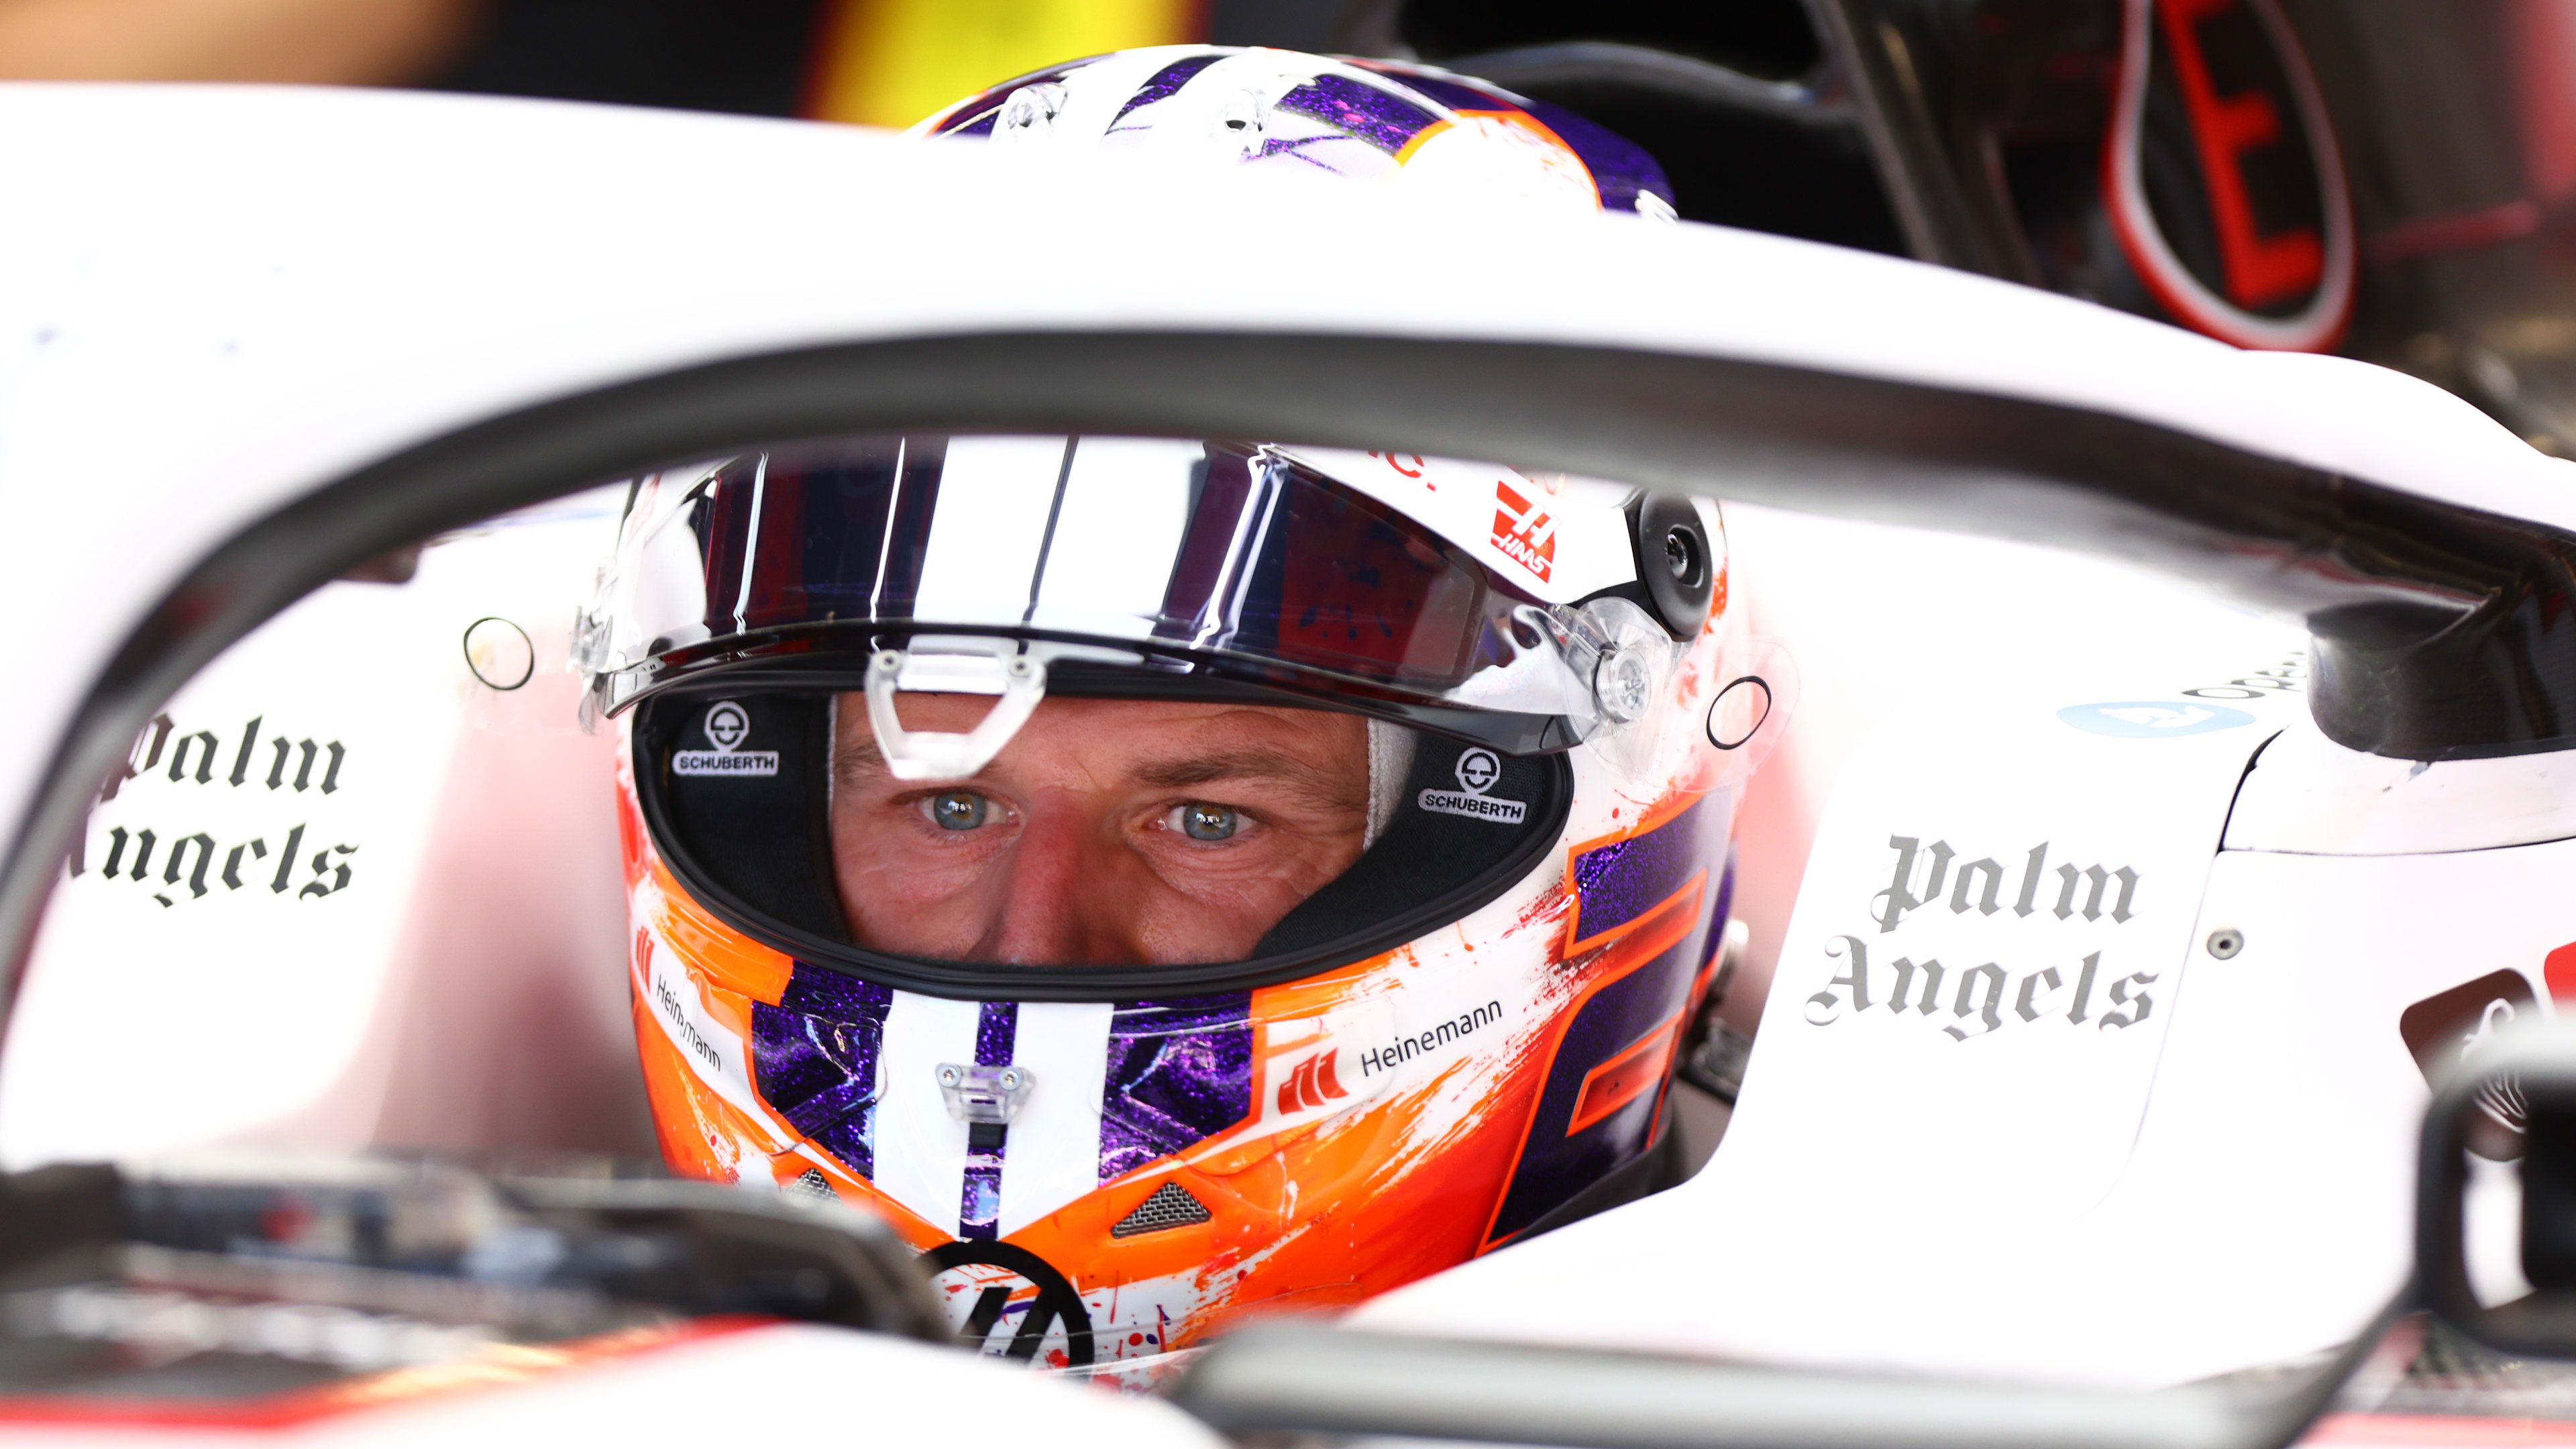 BARCELONA, SPAIN - JUNE 02: Nico Hulkenberg of Germany and Haas F1 prepares to drive in the garage